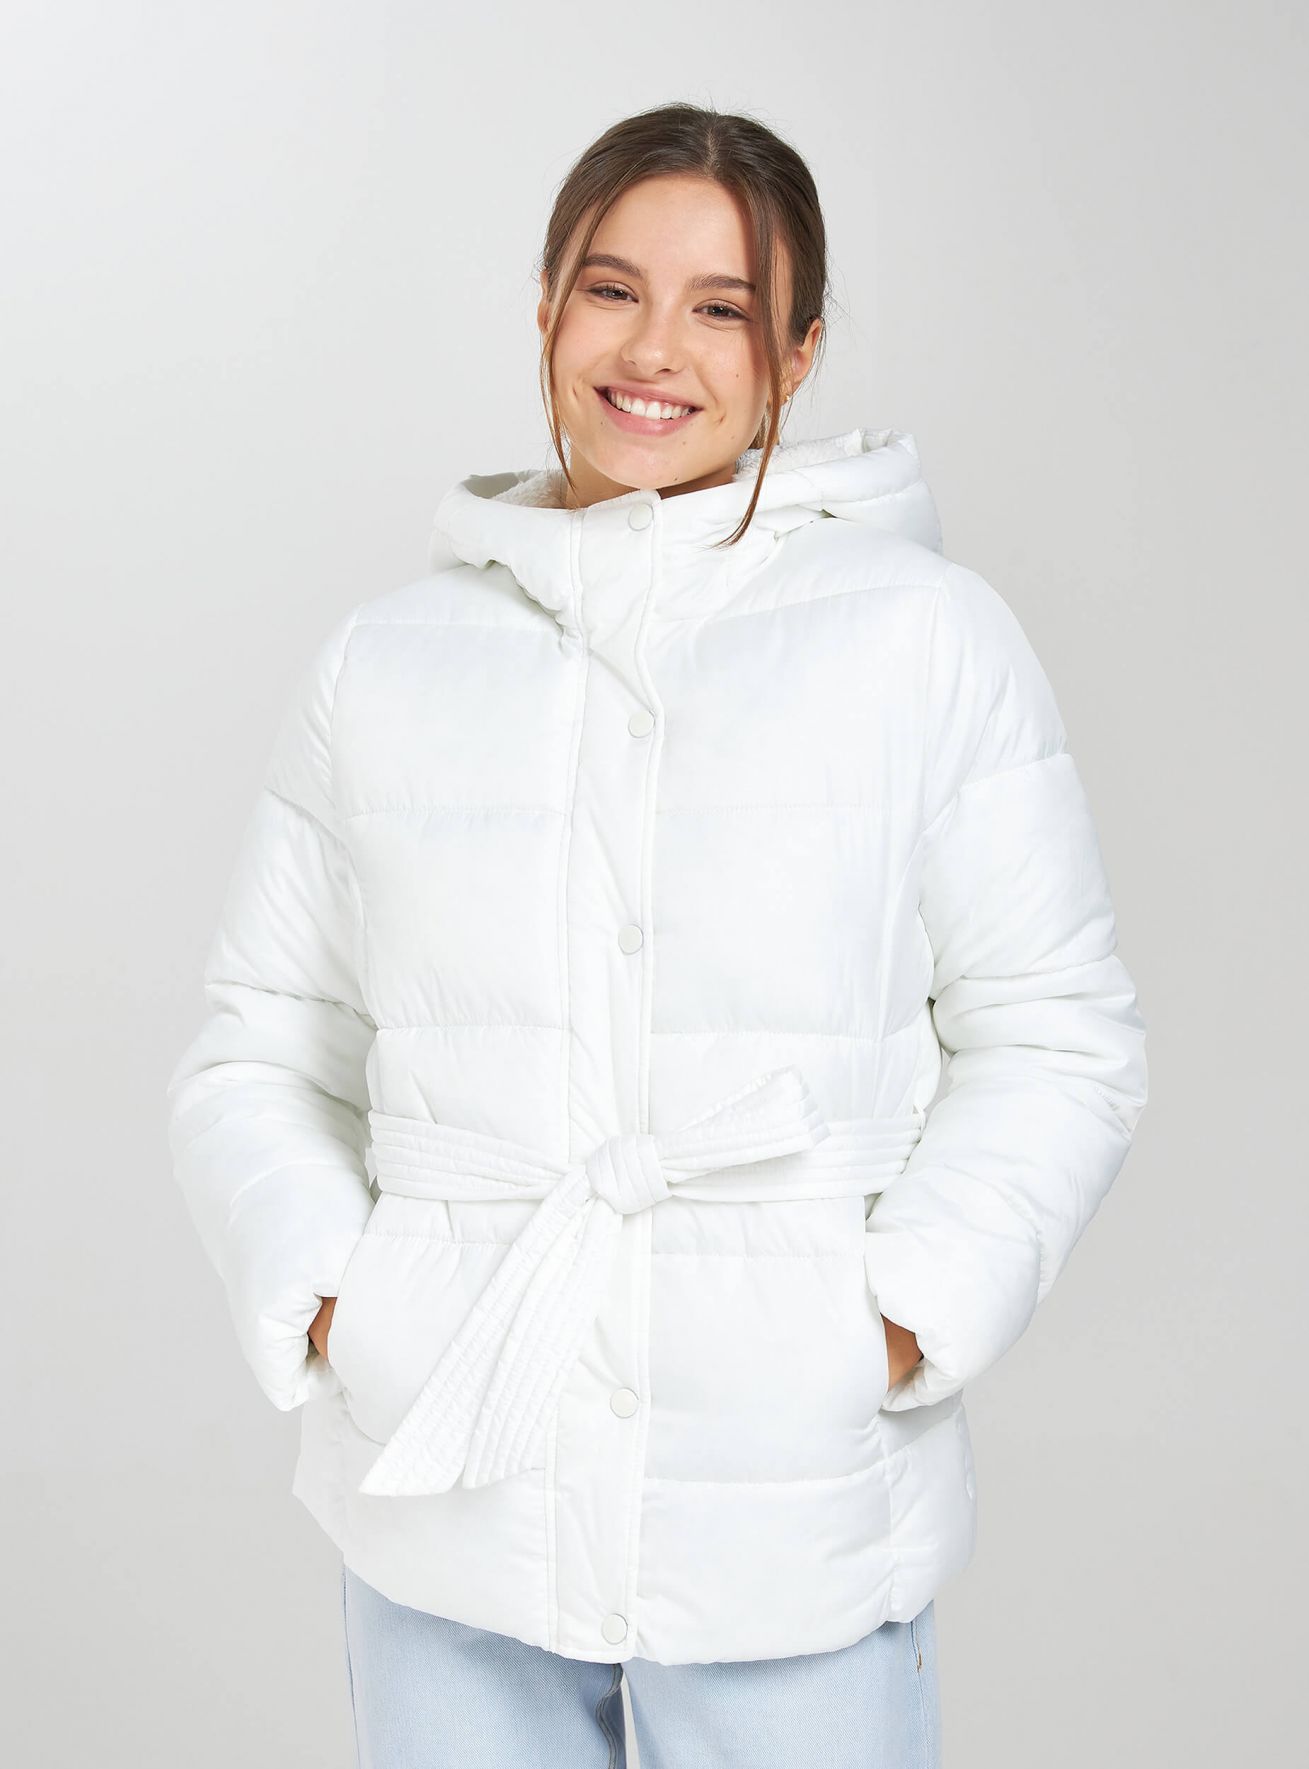 white wool jacket short